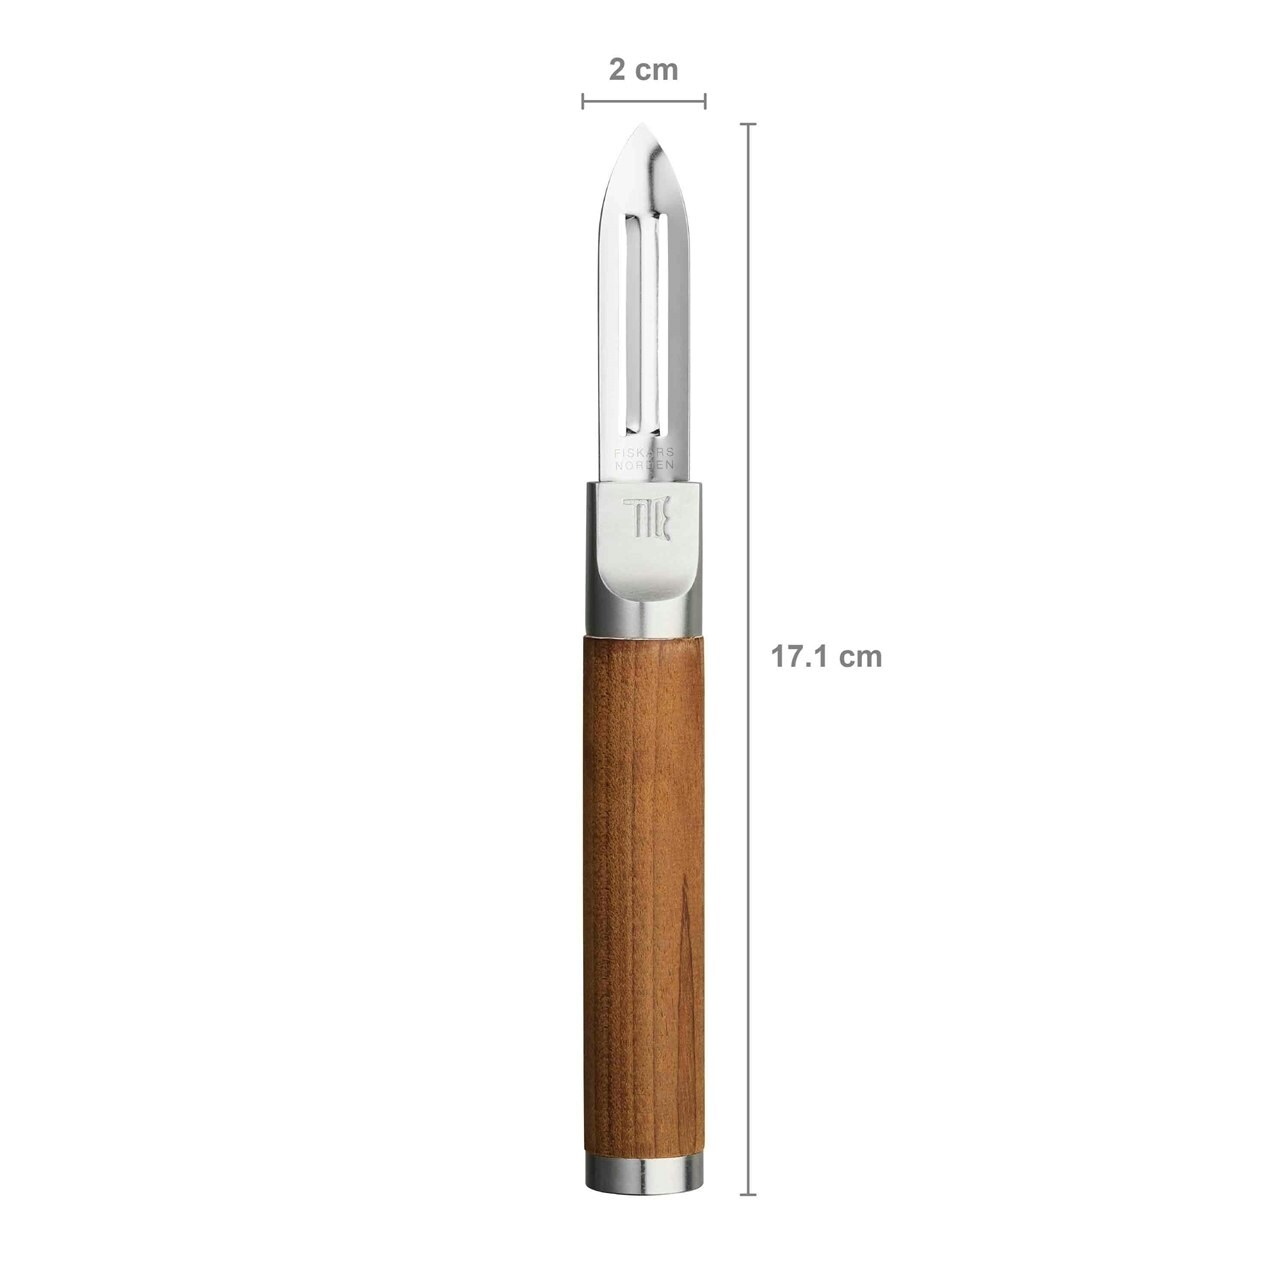 https://royaldesign.com/image/2/fiskars-norden-potato-peeler-with-fixed-blade-1